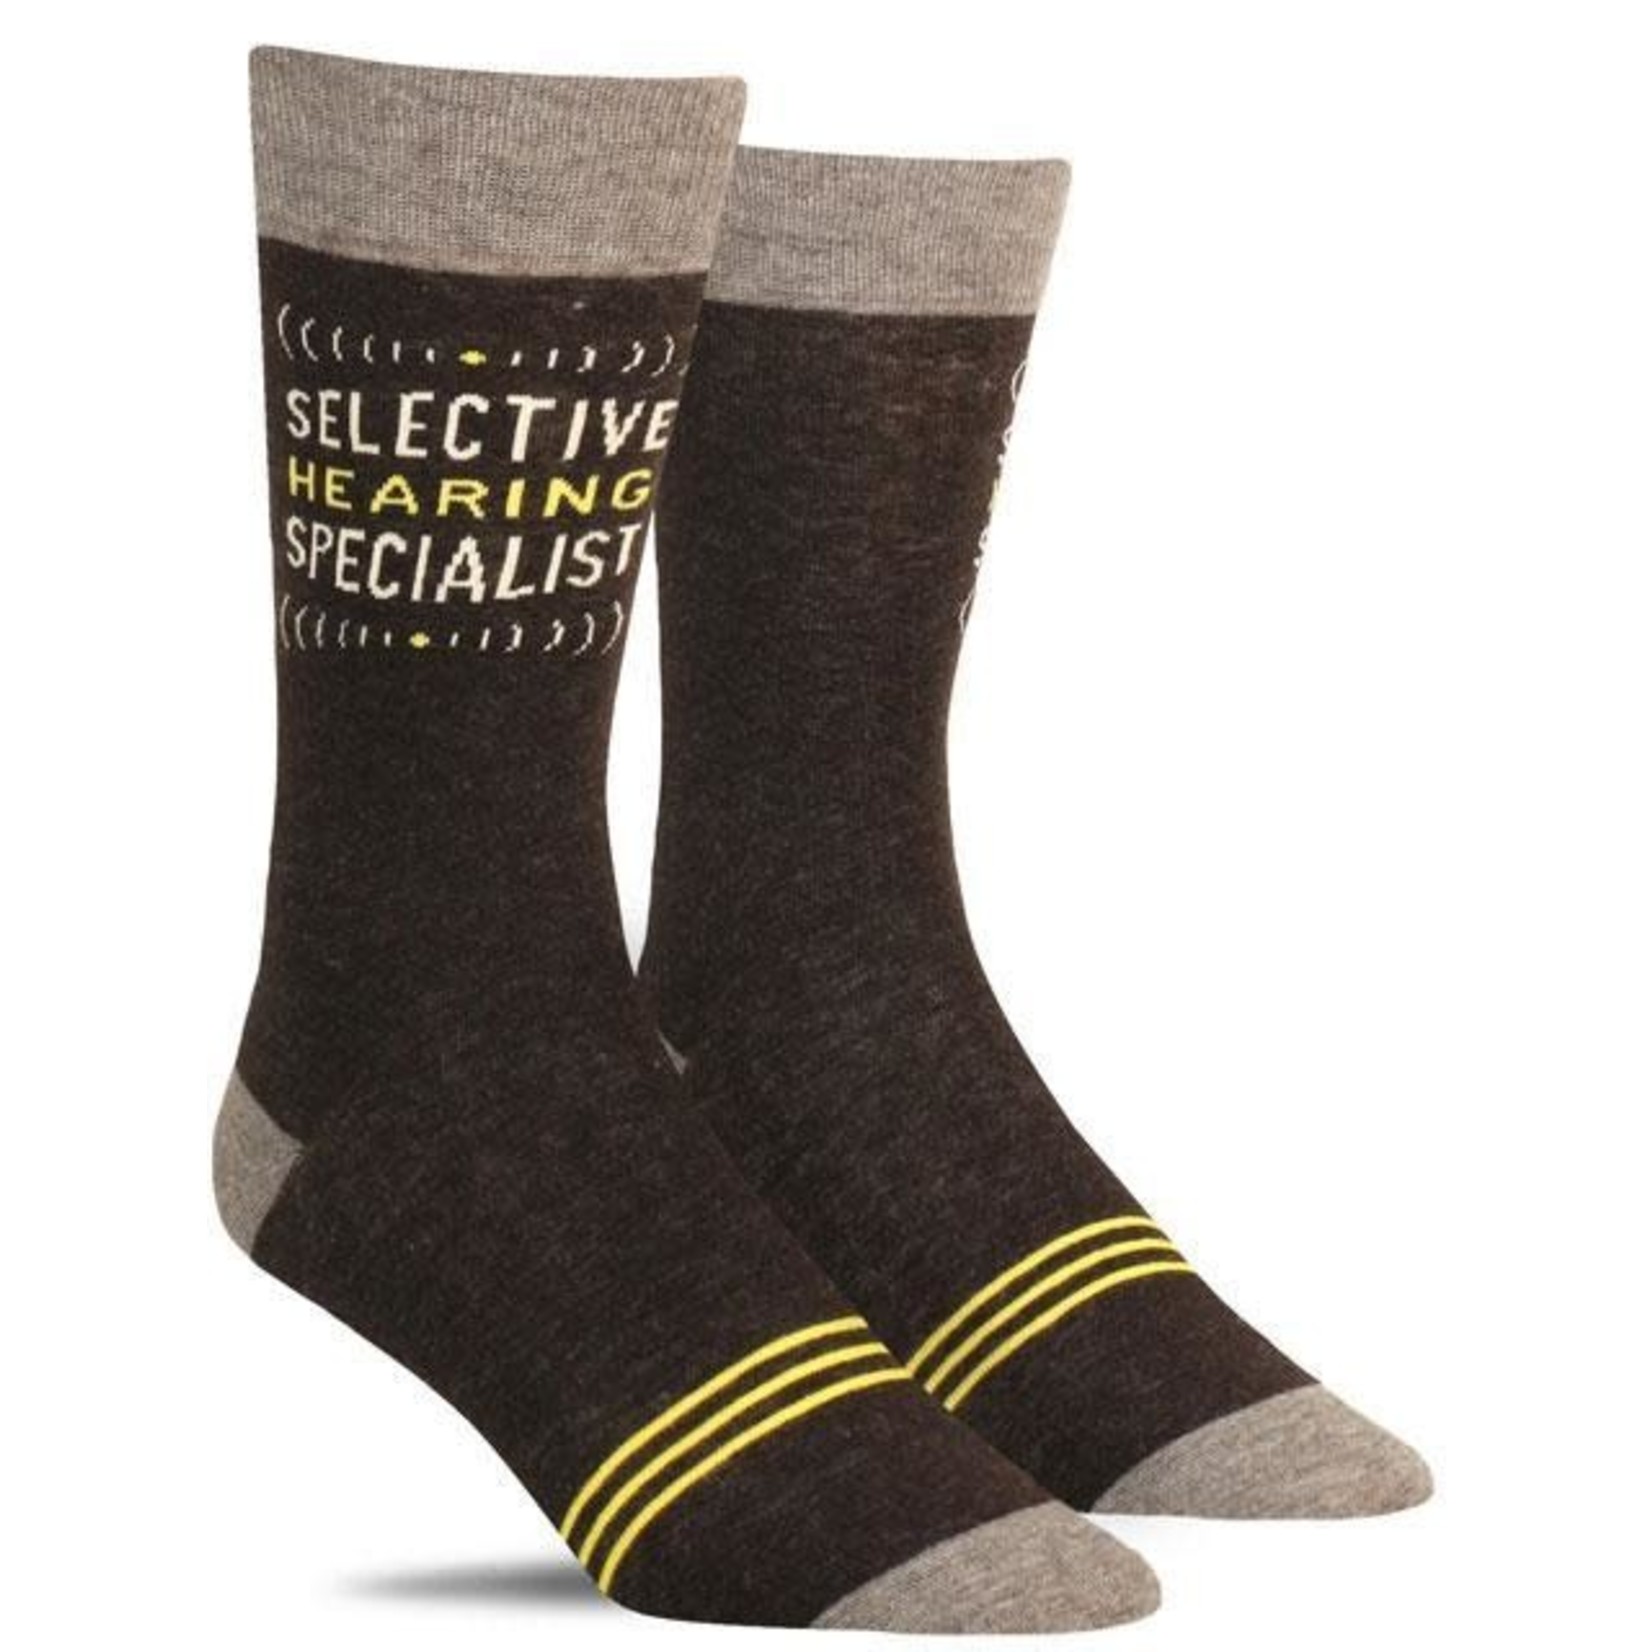 Socks (Mens) - Selective Hearing Specialist